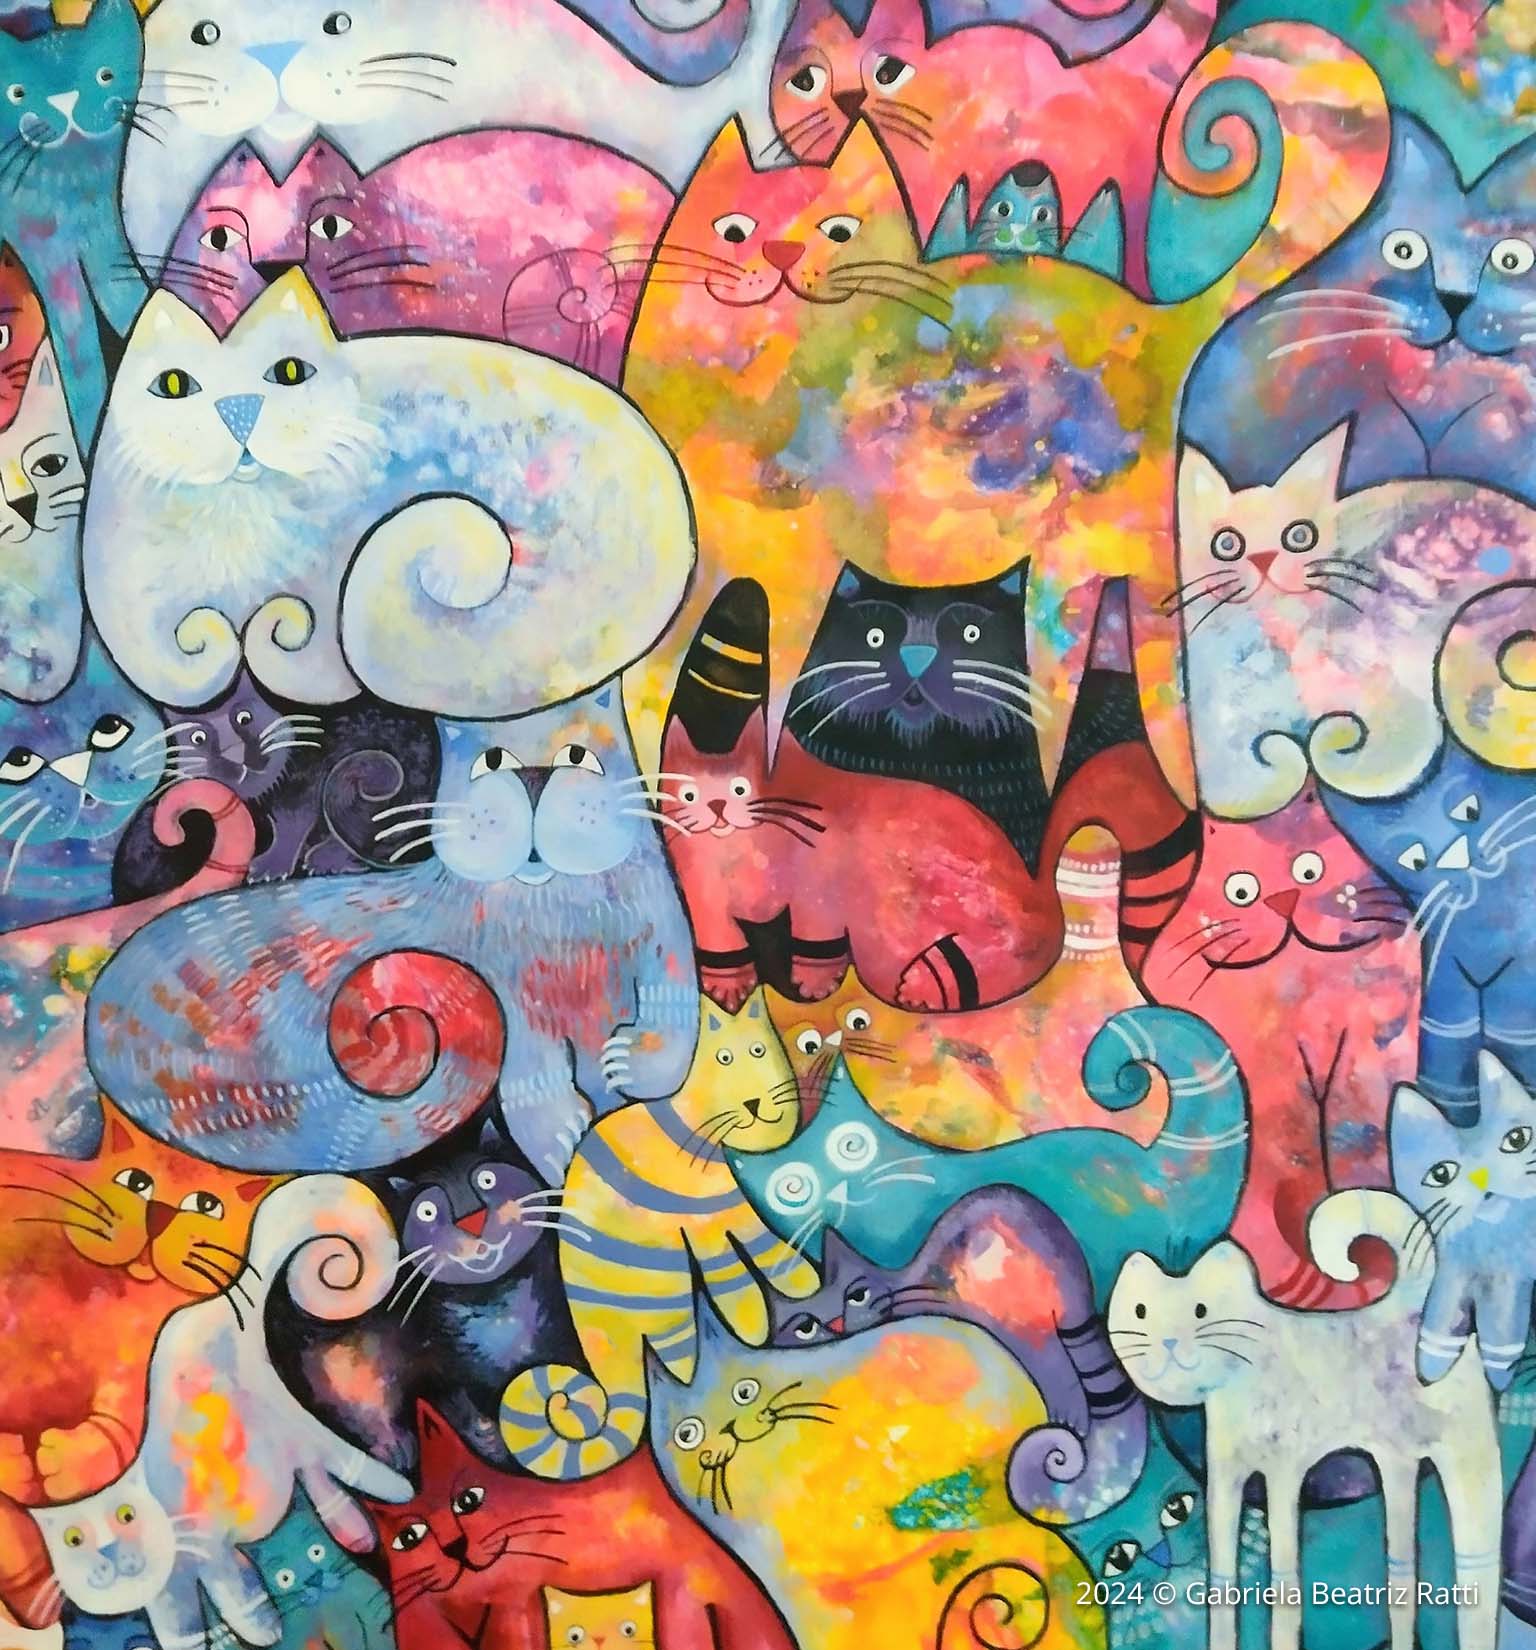 Cute & colorful cat art